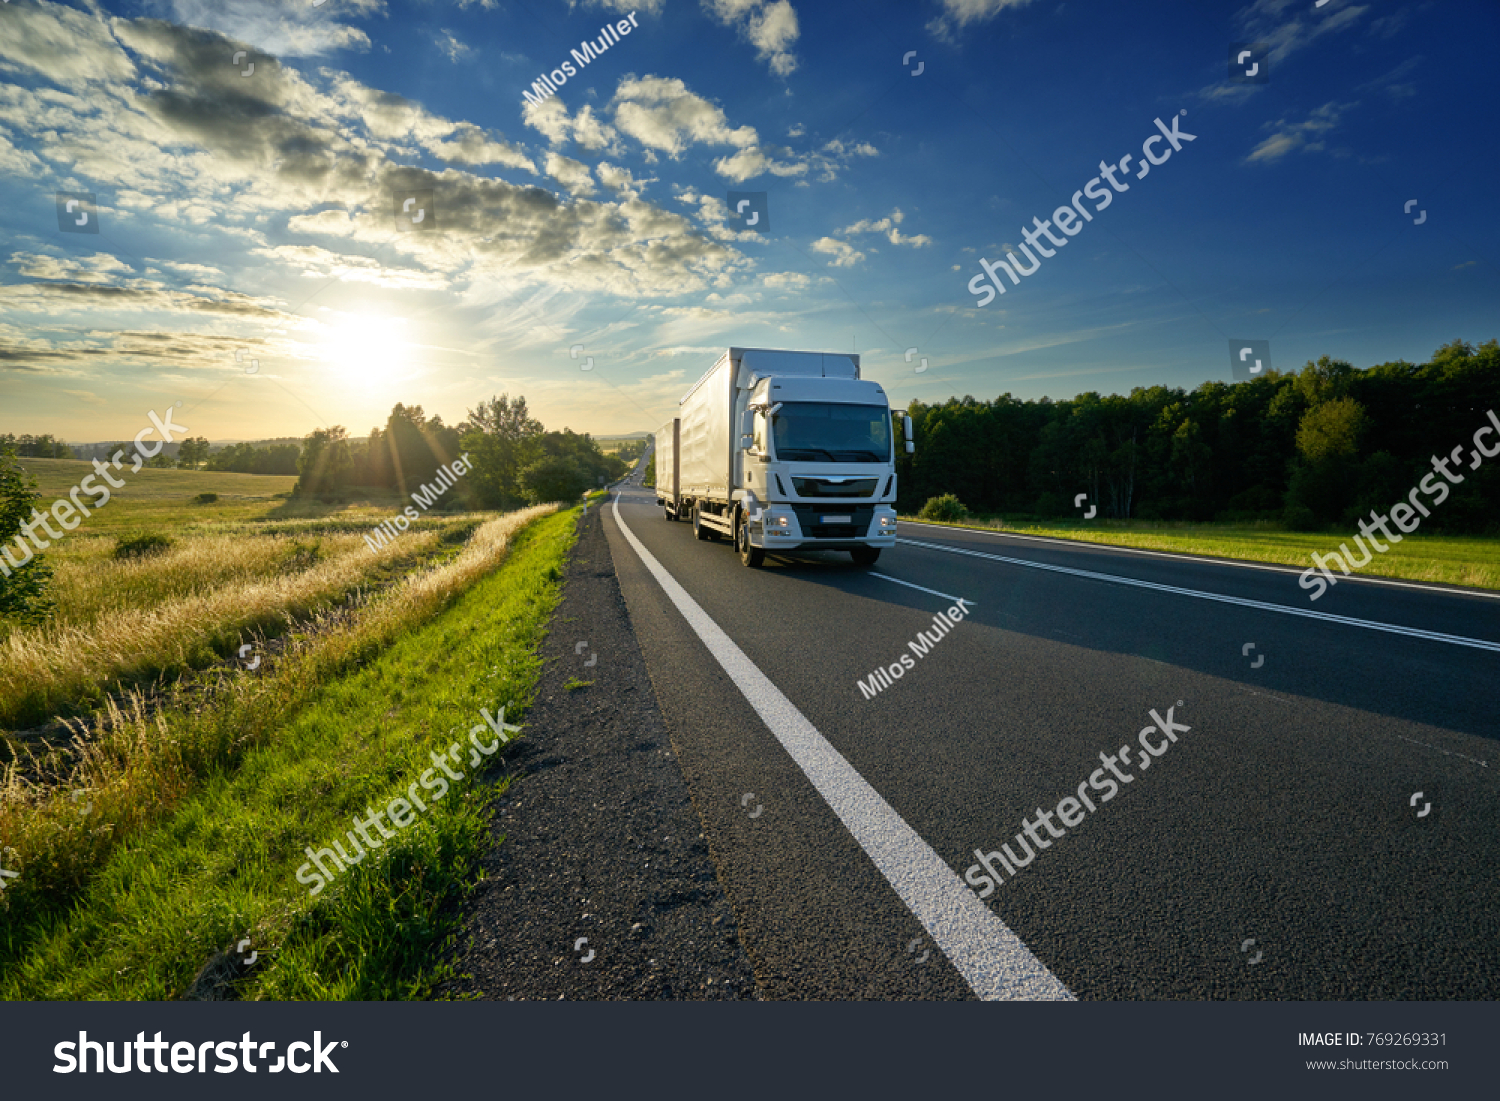 White delivery truck driving on the asphalt road in rural landscape at sunset #769269331